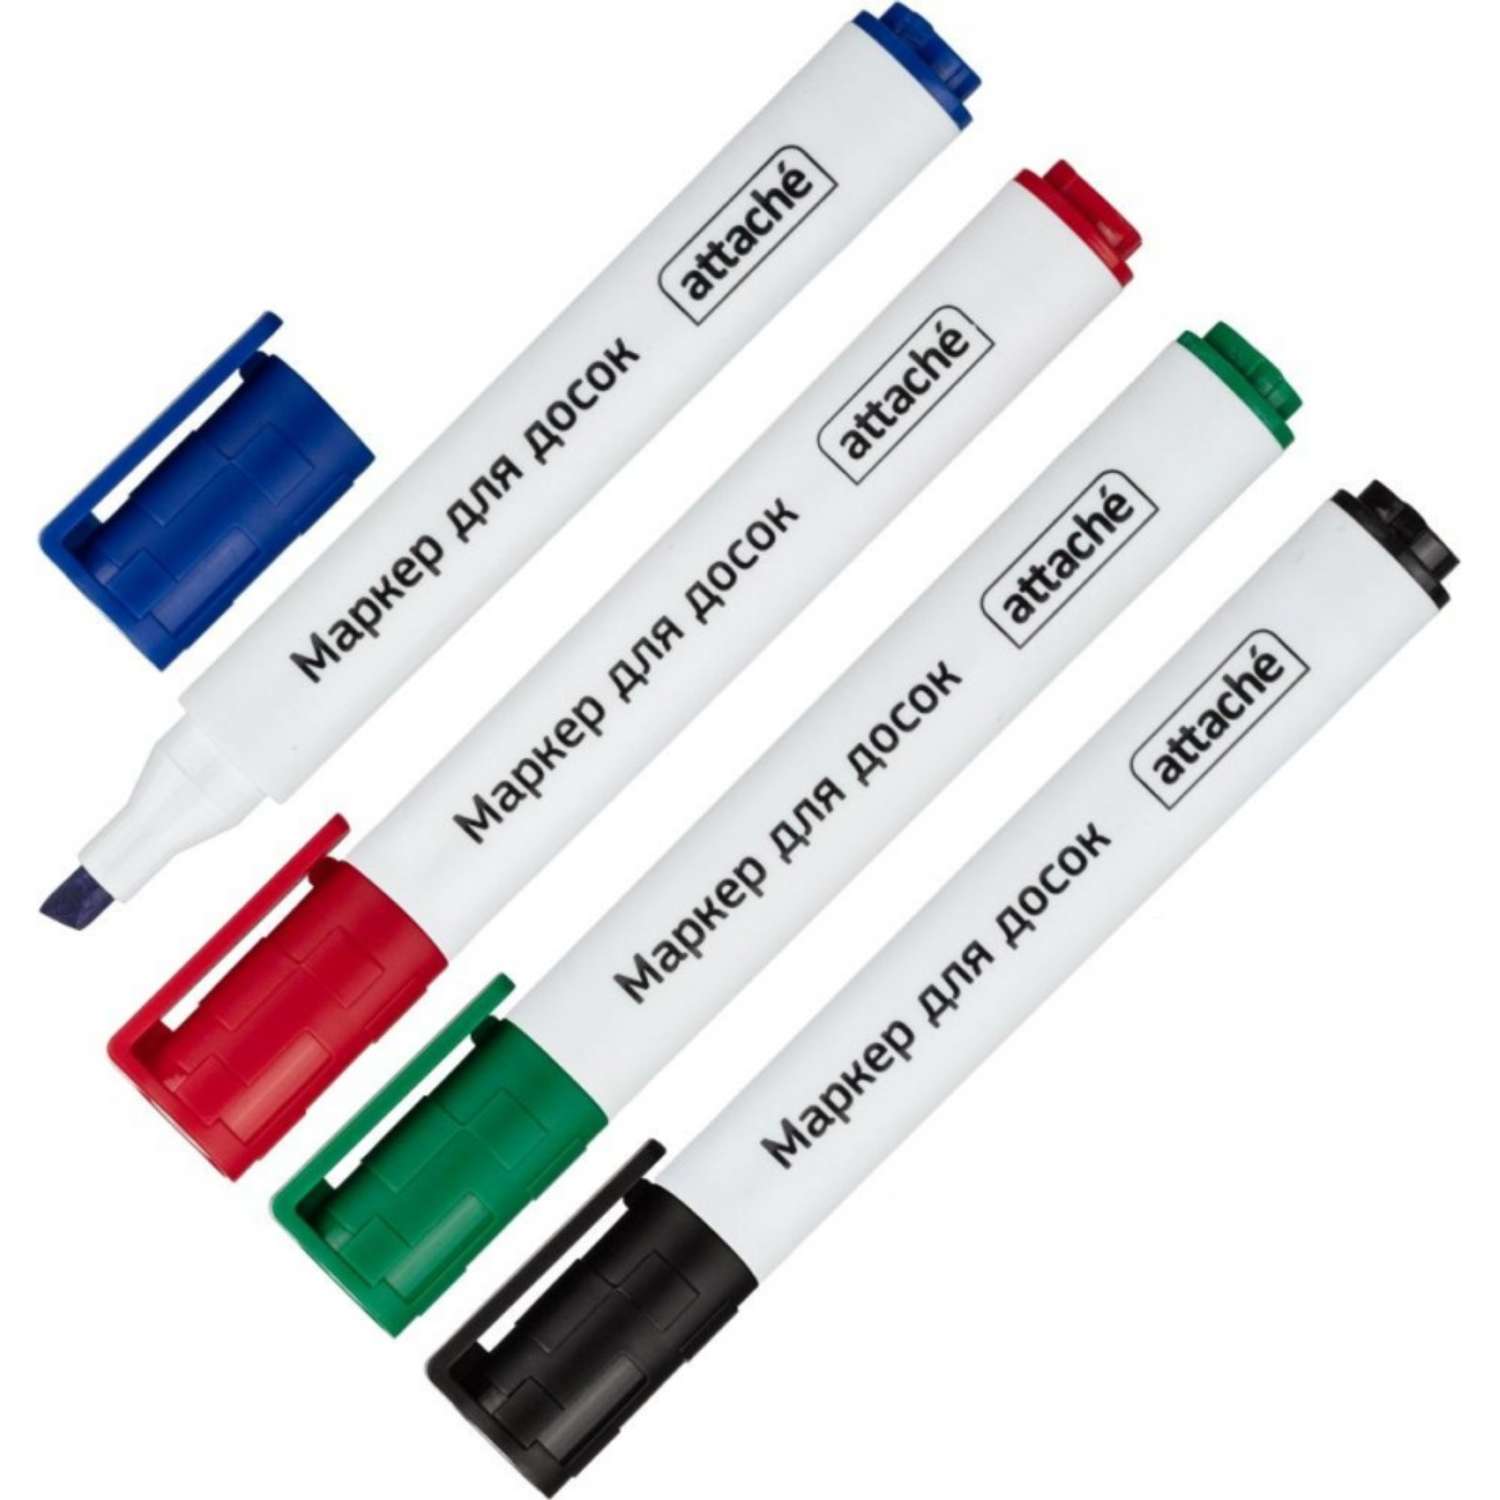 Маркер для досок Attache Accent 4 цвета со скошенным након 1-5мм 3 упаковки по 4 цвета - фото 1